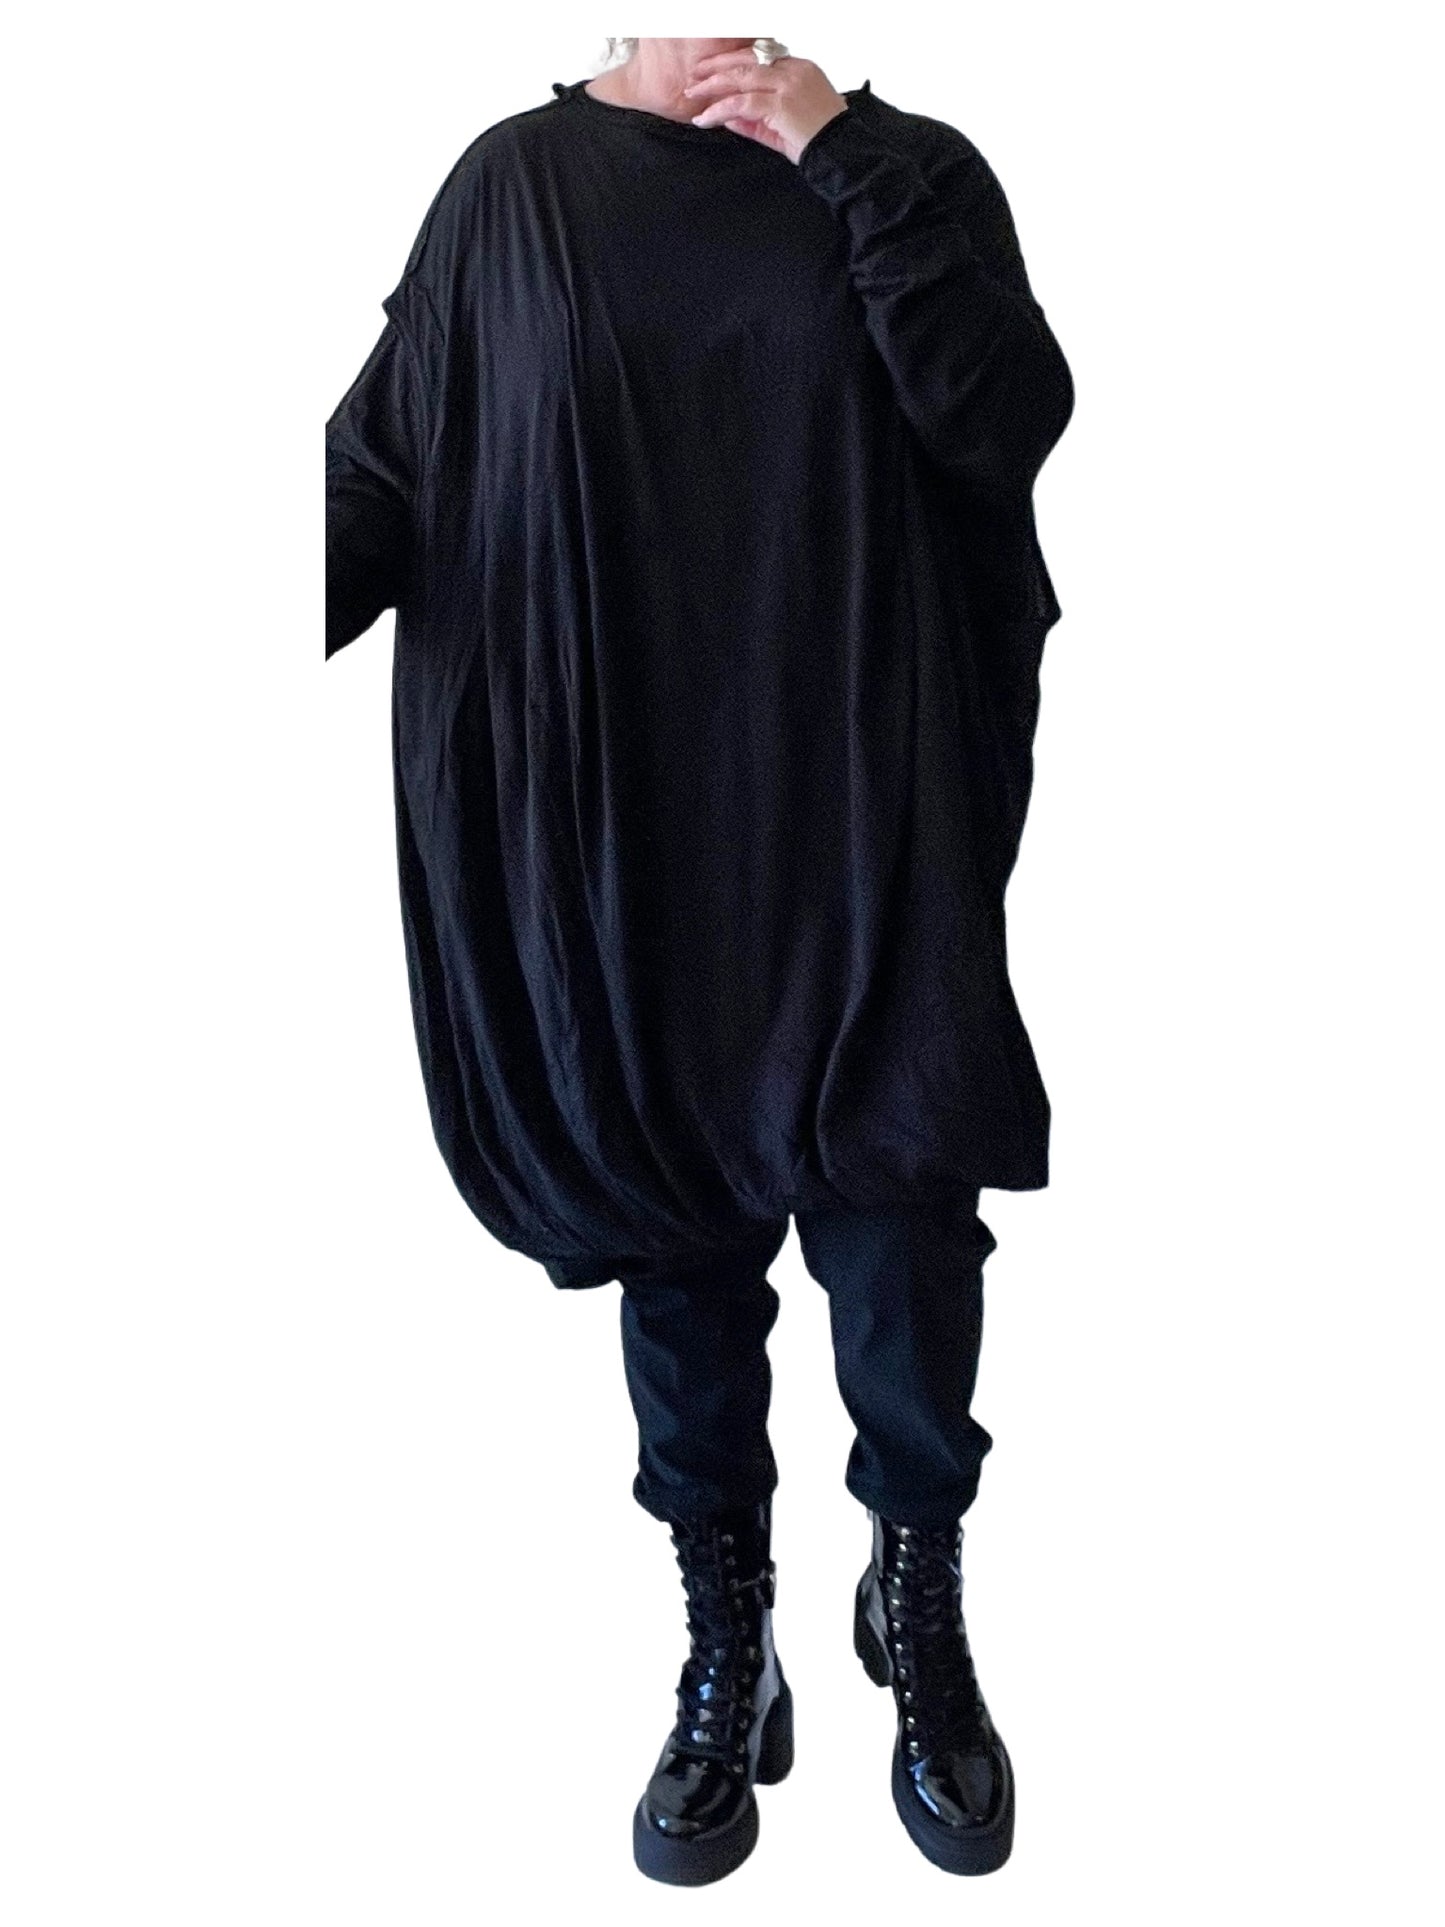 Rundholz Black Tunic Dress